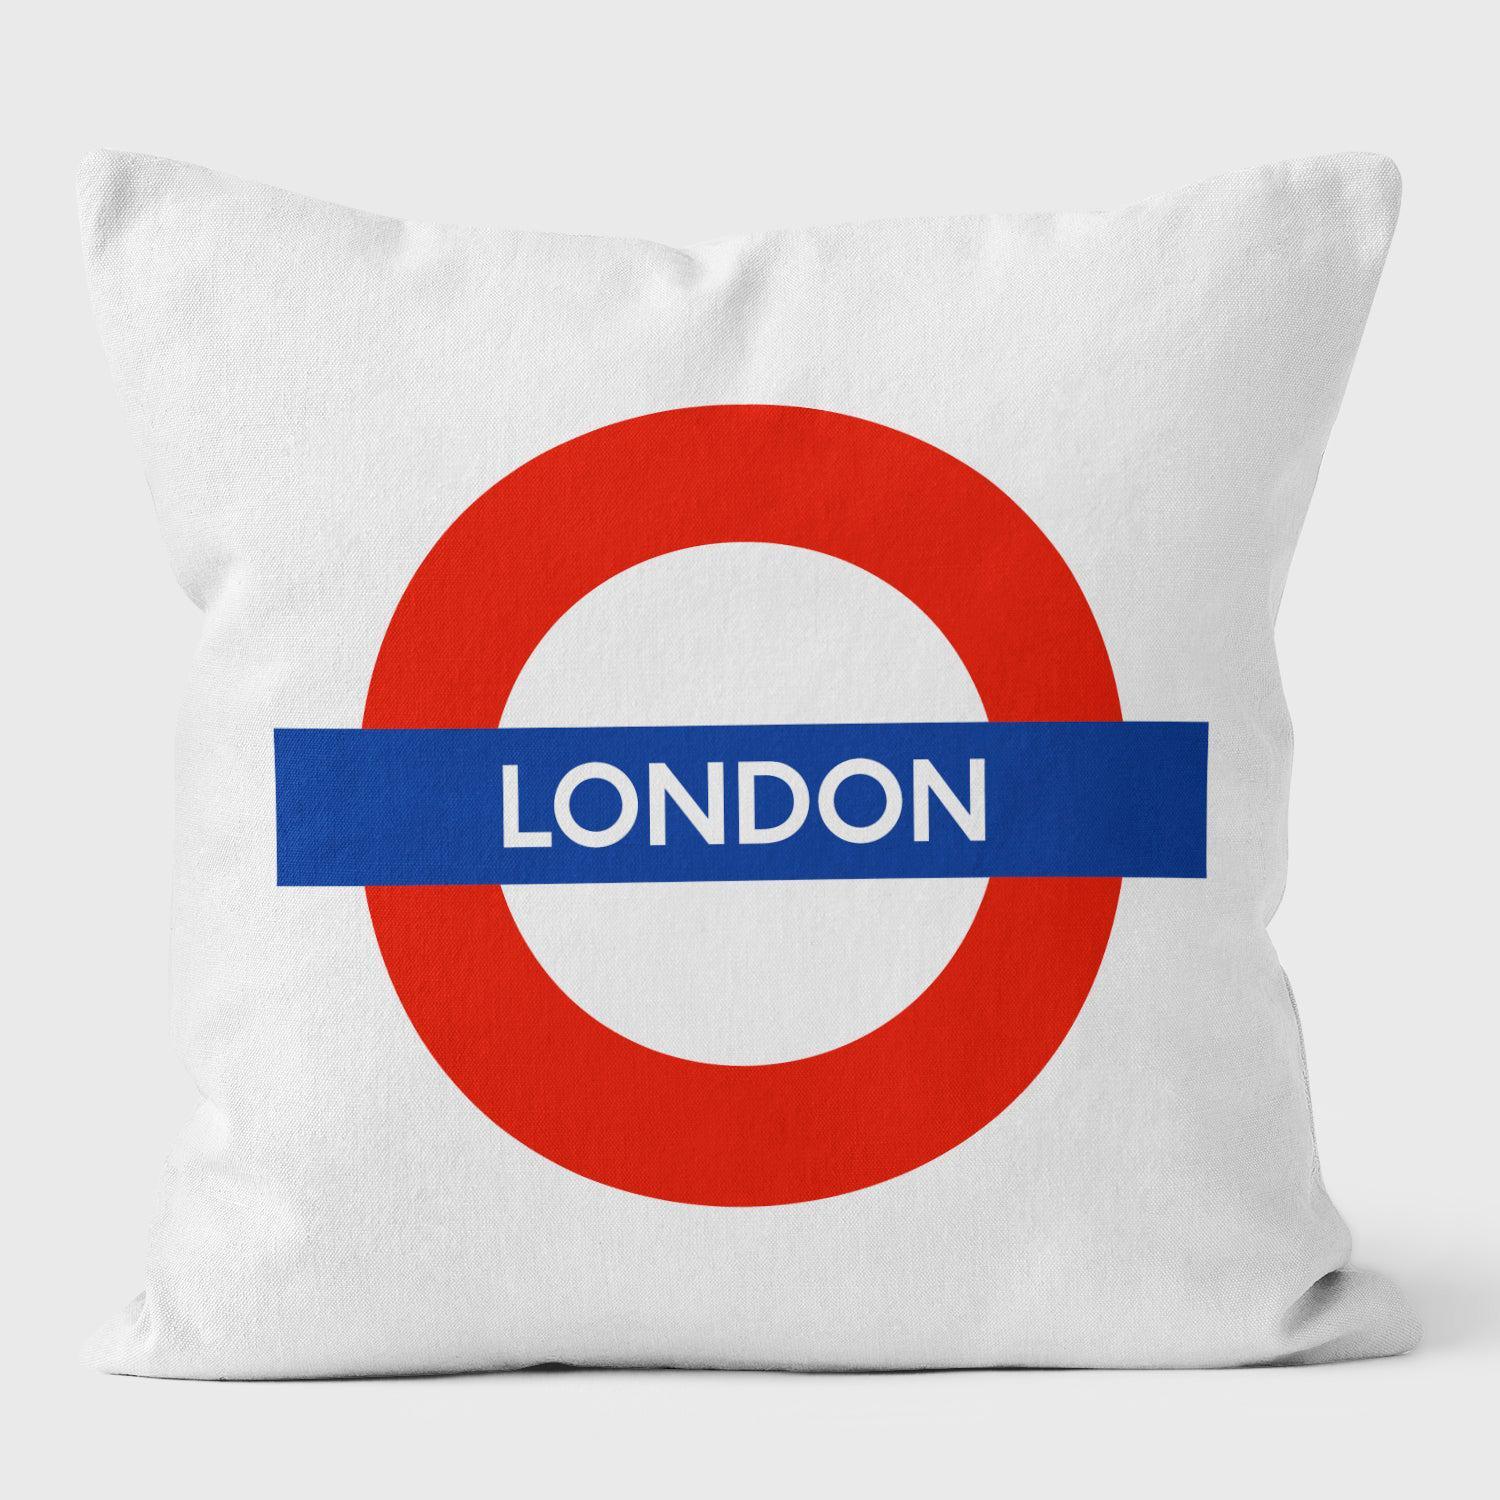 London Tube Station London Transport Museum Cushion - Handmade Cushions UK - WeLoveCushions